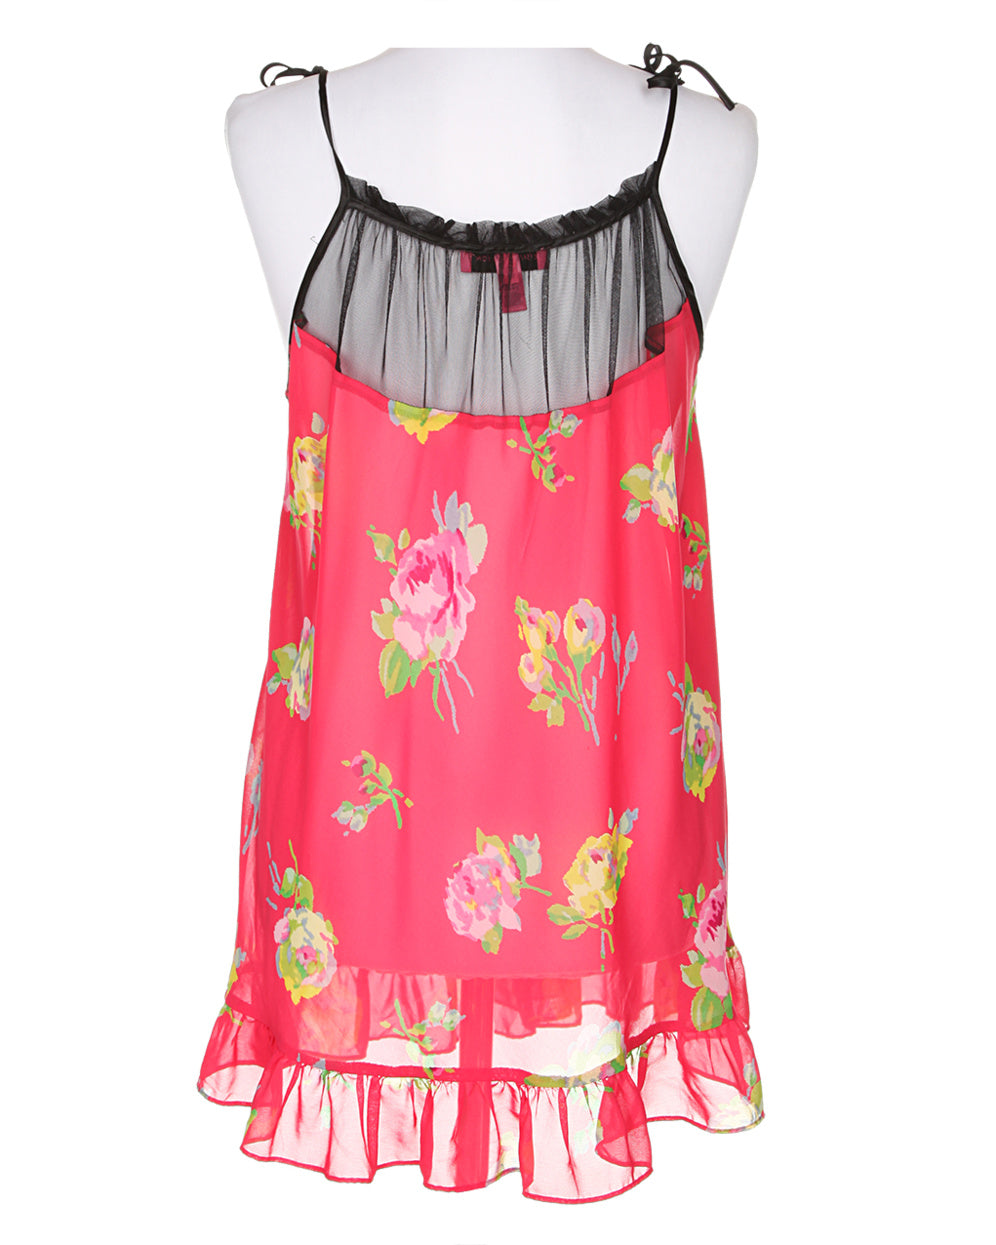 Betsey Johnson Pink Slip Dress - M